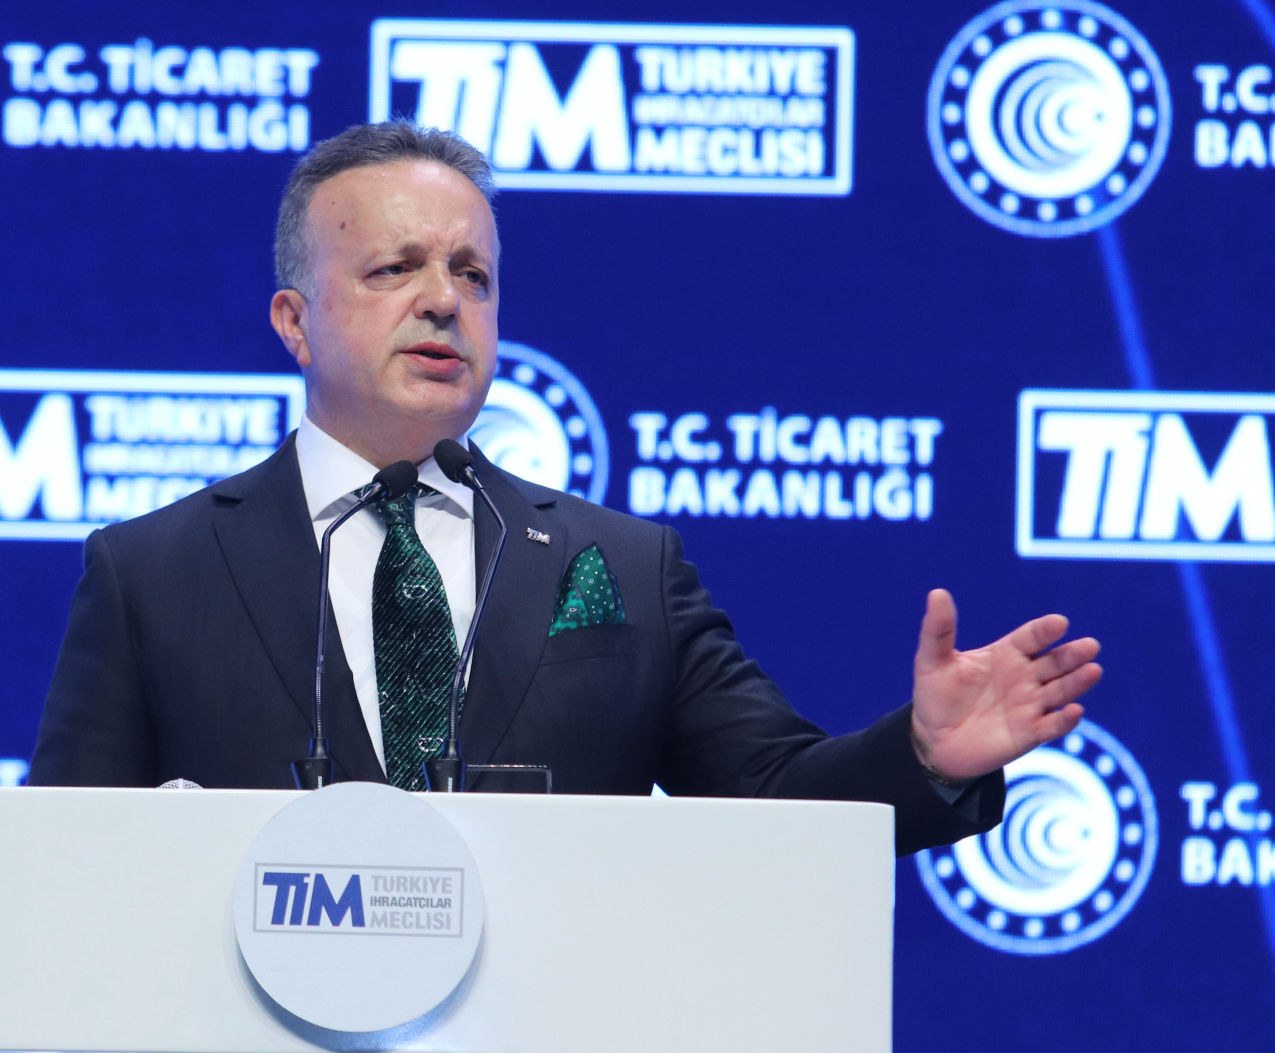 TİM Chairman İsmail Gülle ; We will be the pioneers of Türkiye's green economic transformation